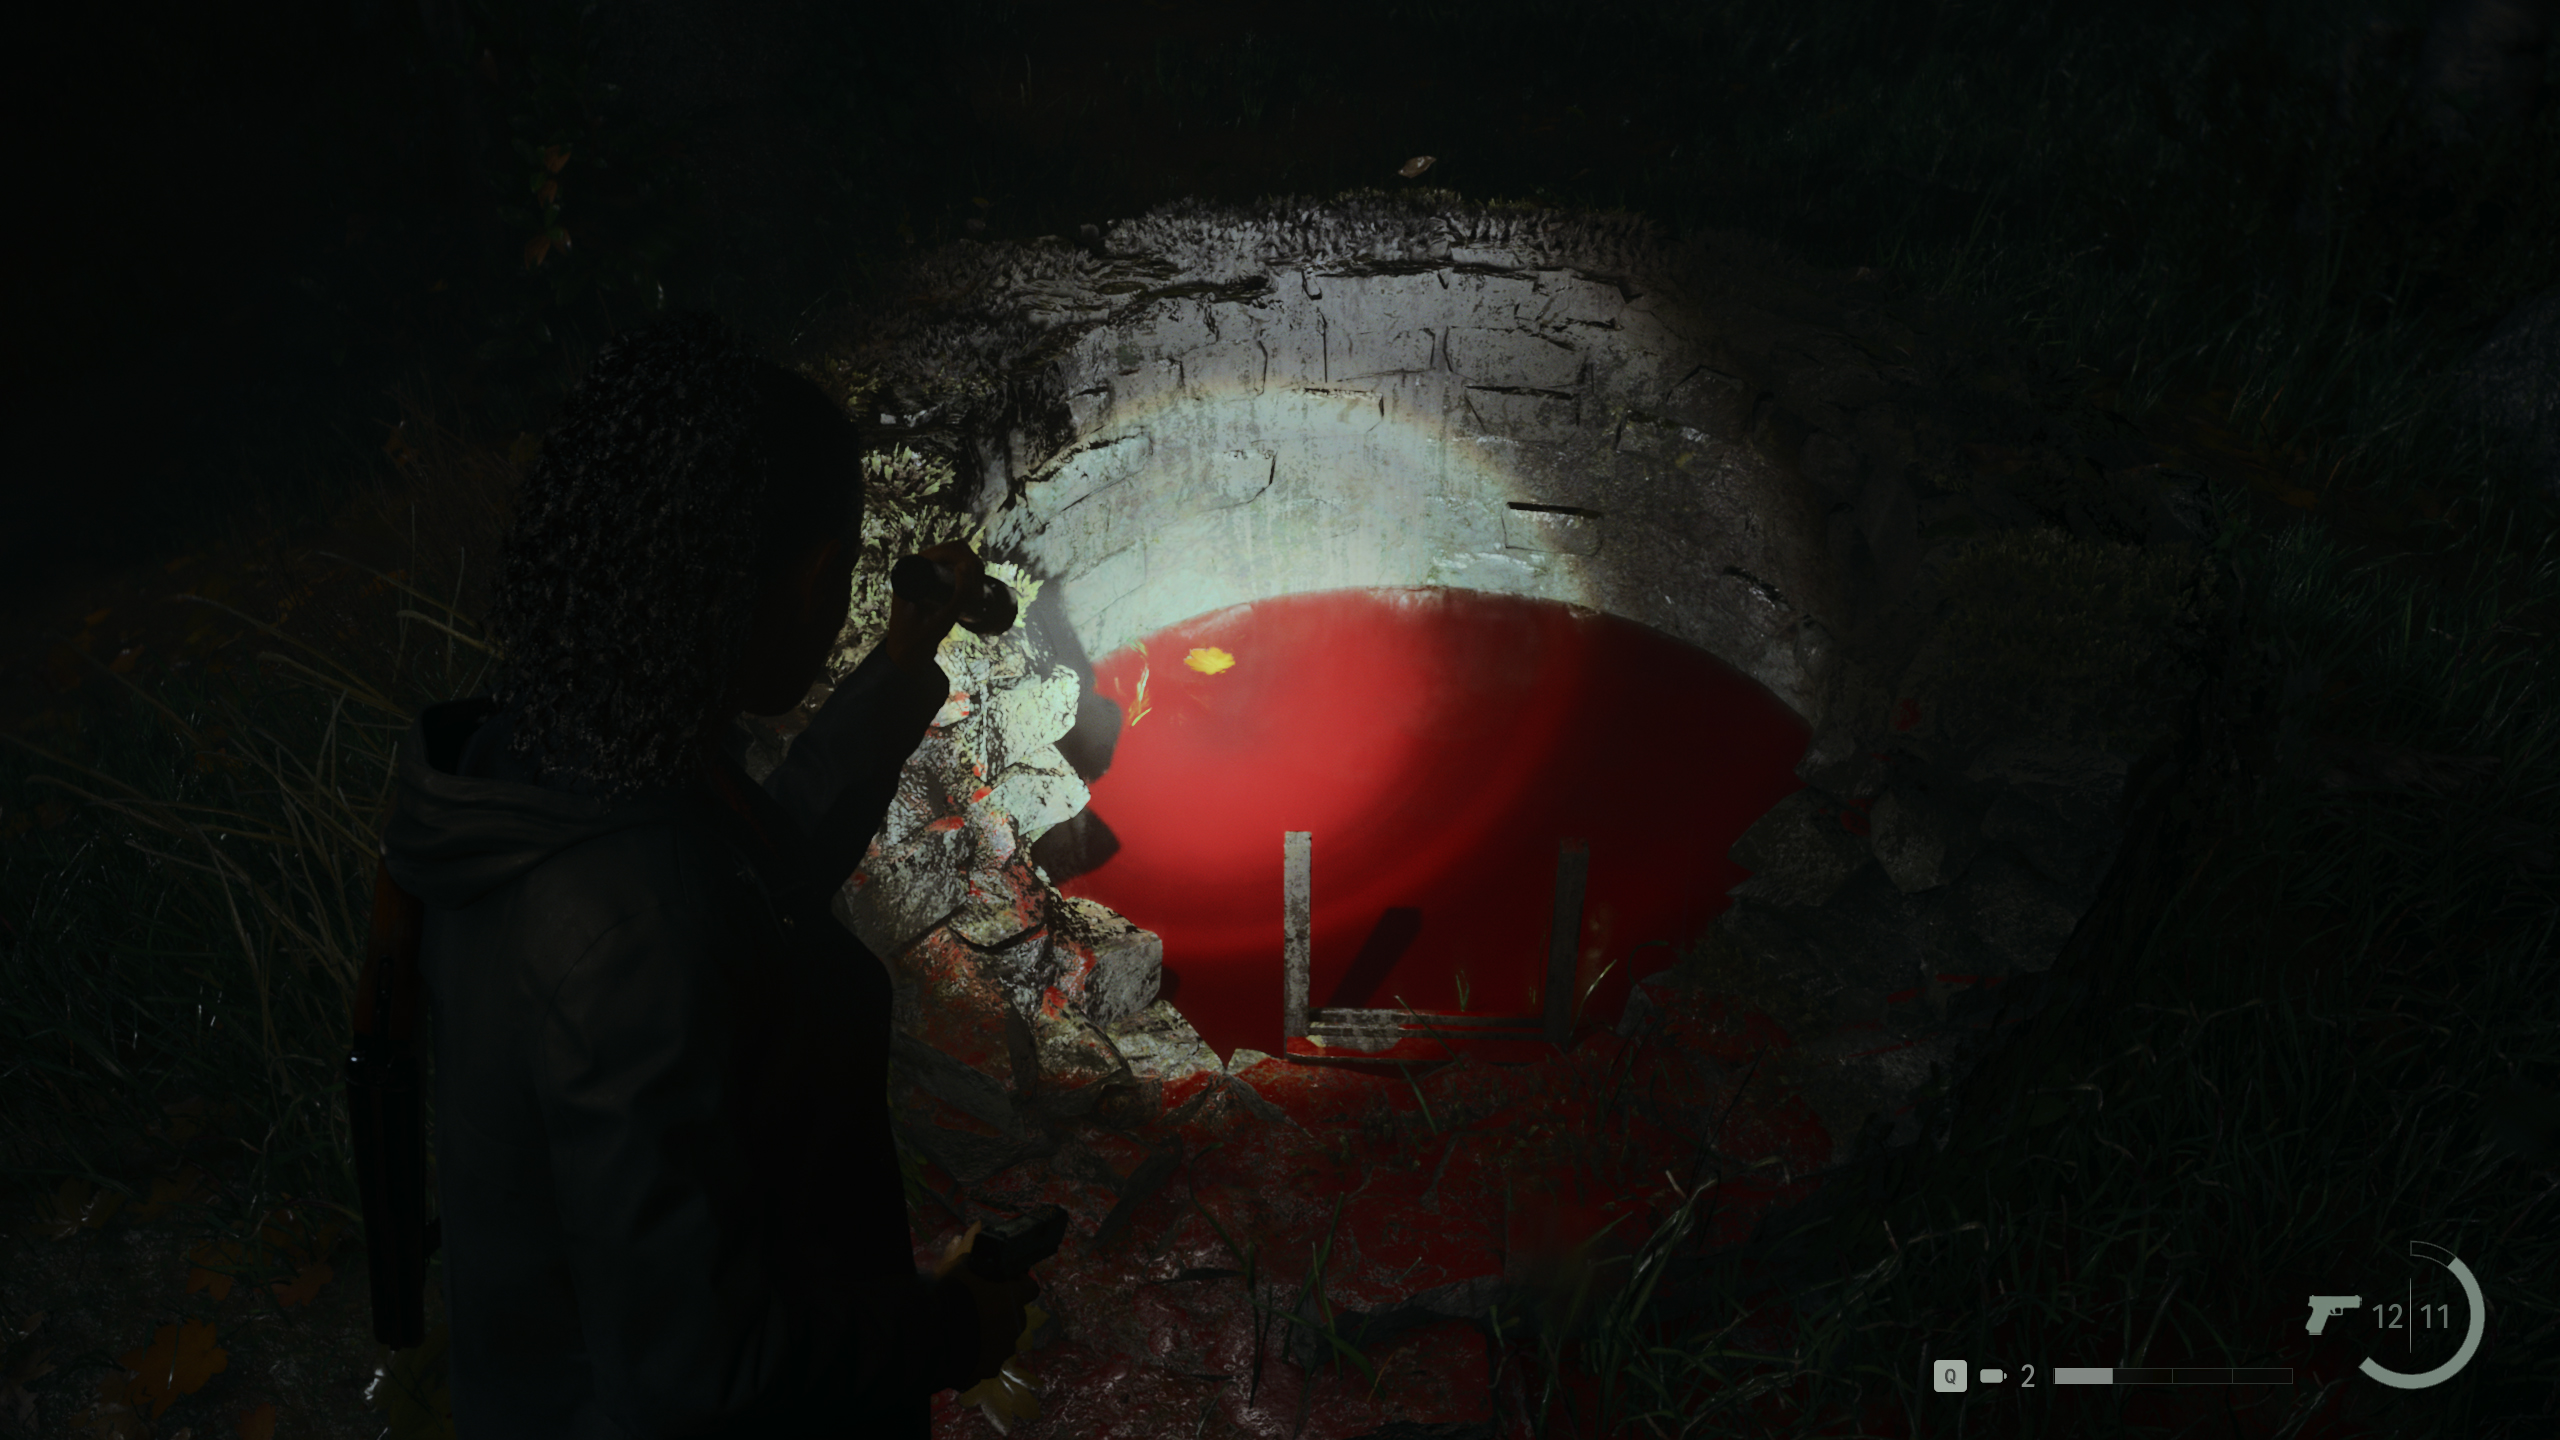 Alan Wake 2 - Saga ilumina con su antorcha un pozo lleno de sangre